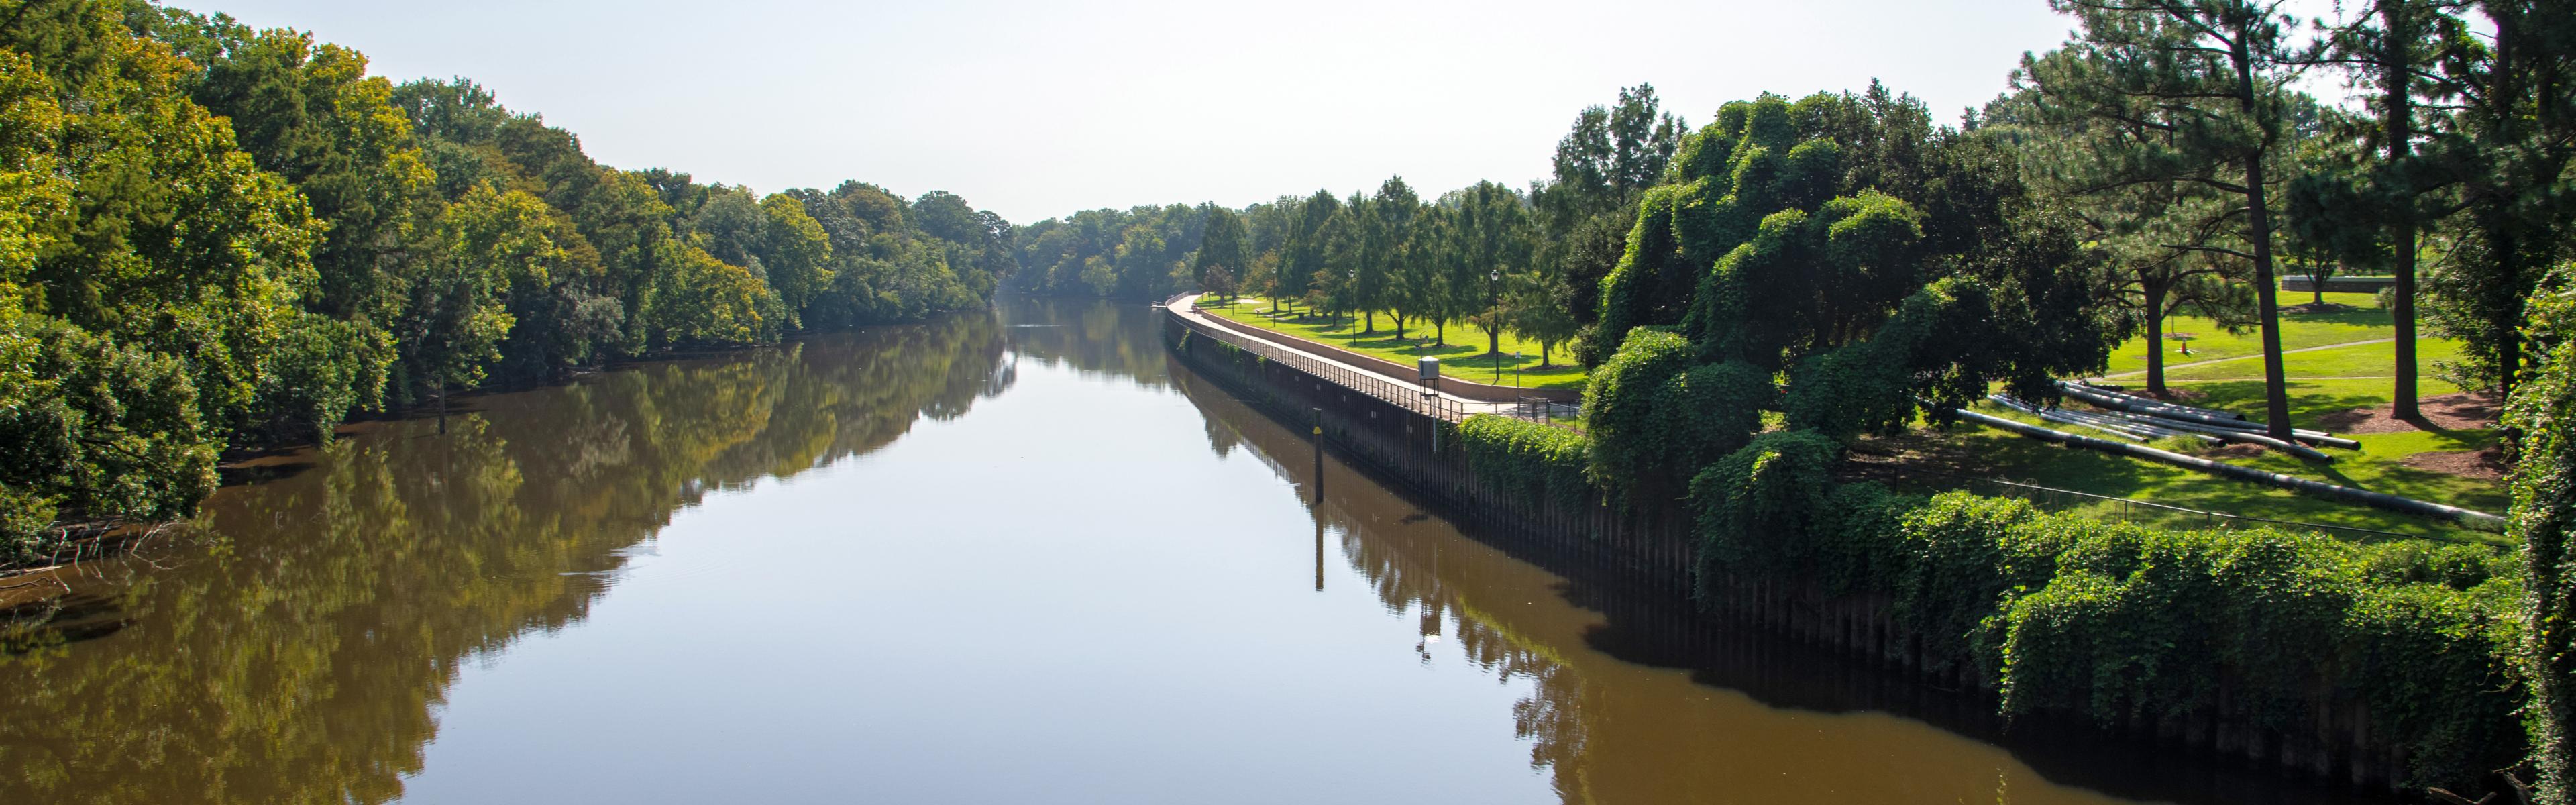 Tar River next to East Carolina University in Greenville, NC